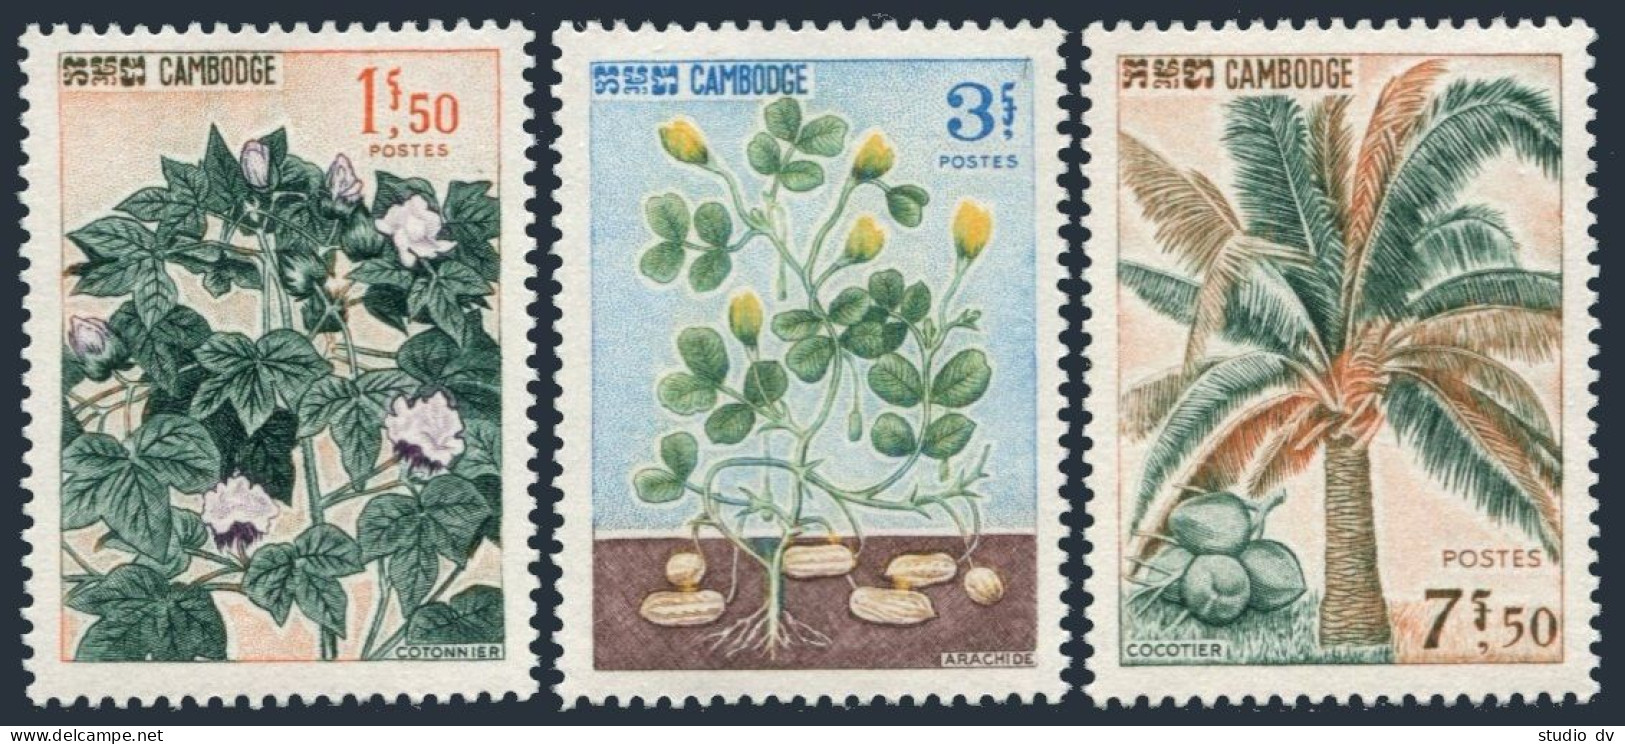 Cambodia 149-151, MNH. Michel 192-194. Cotton, Peanut Plants, Coconut Palm,1965. - Kambodscha